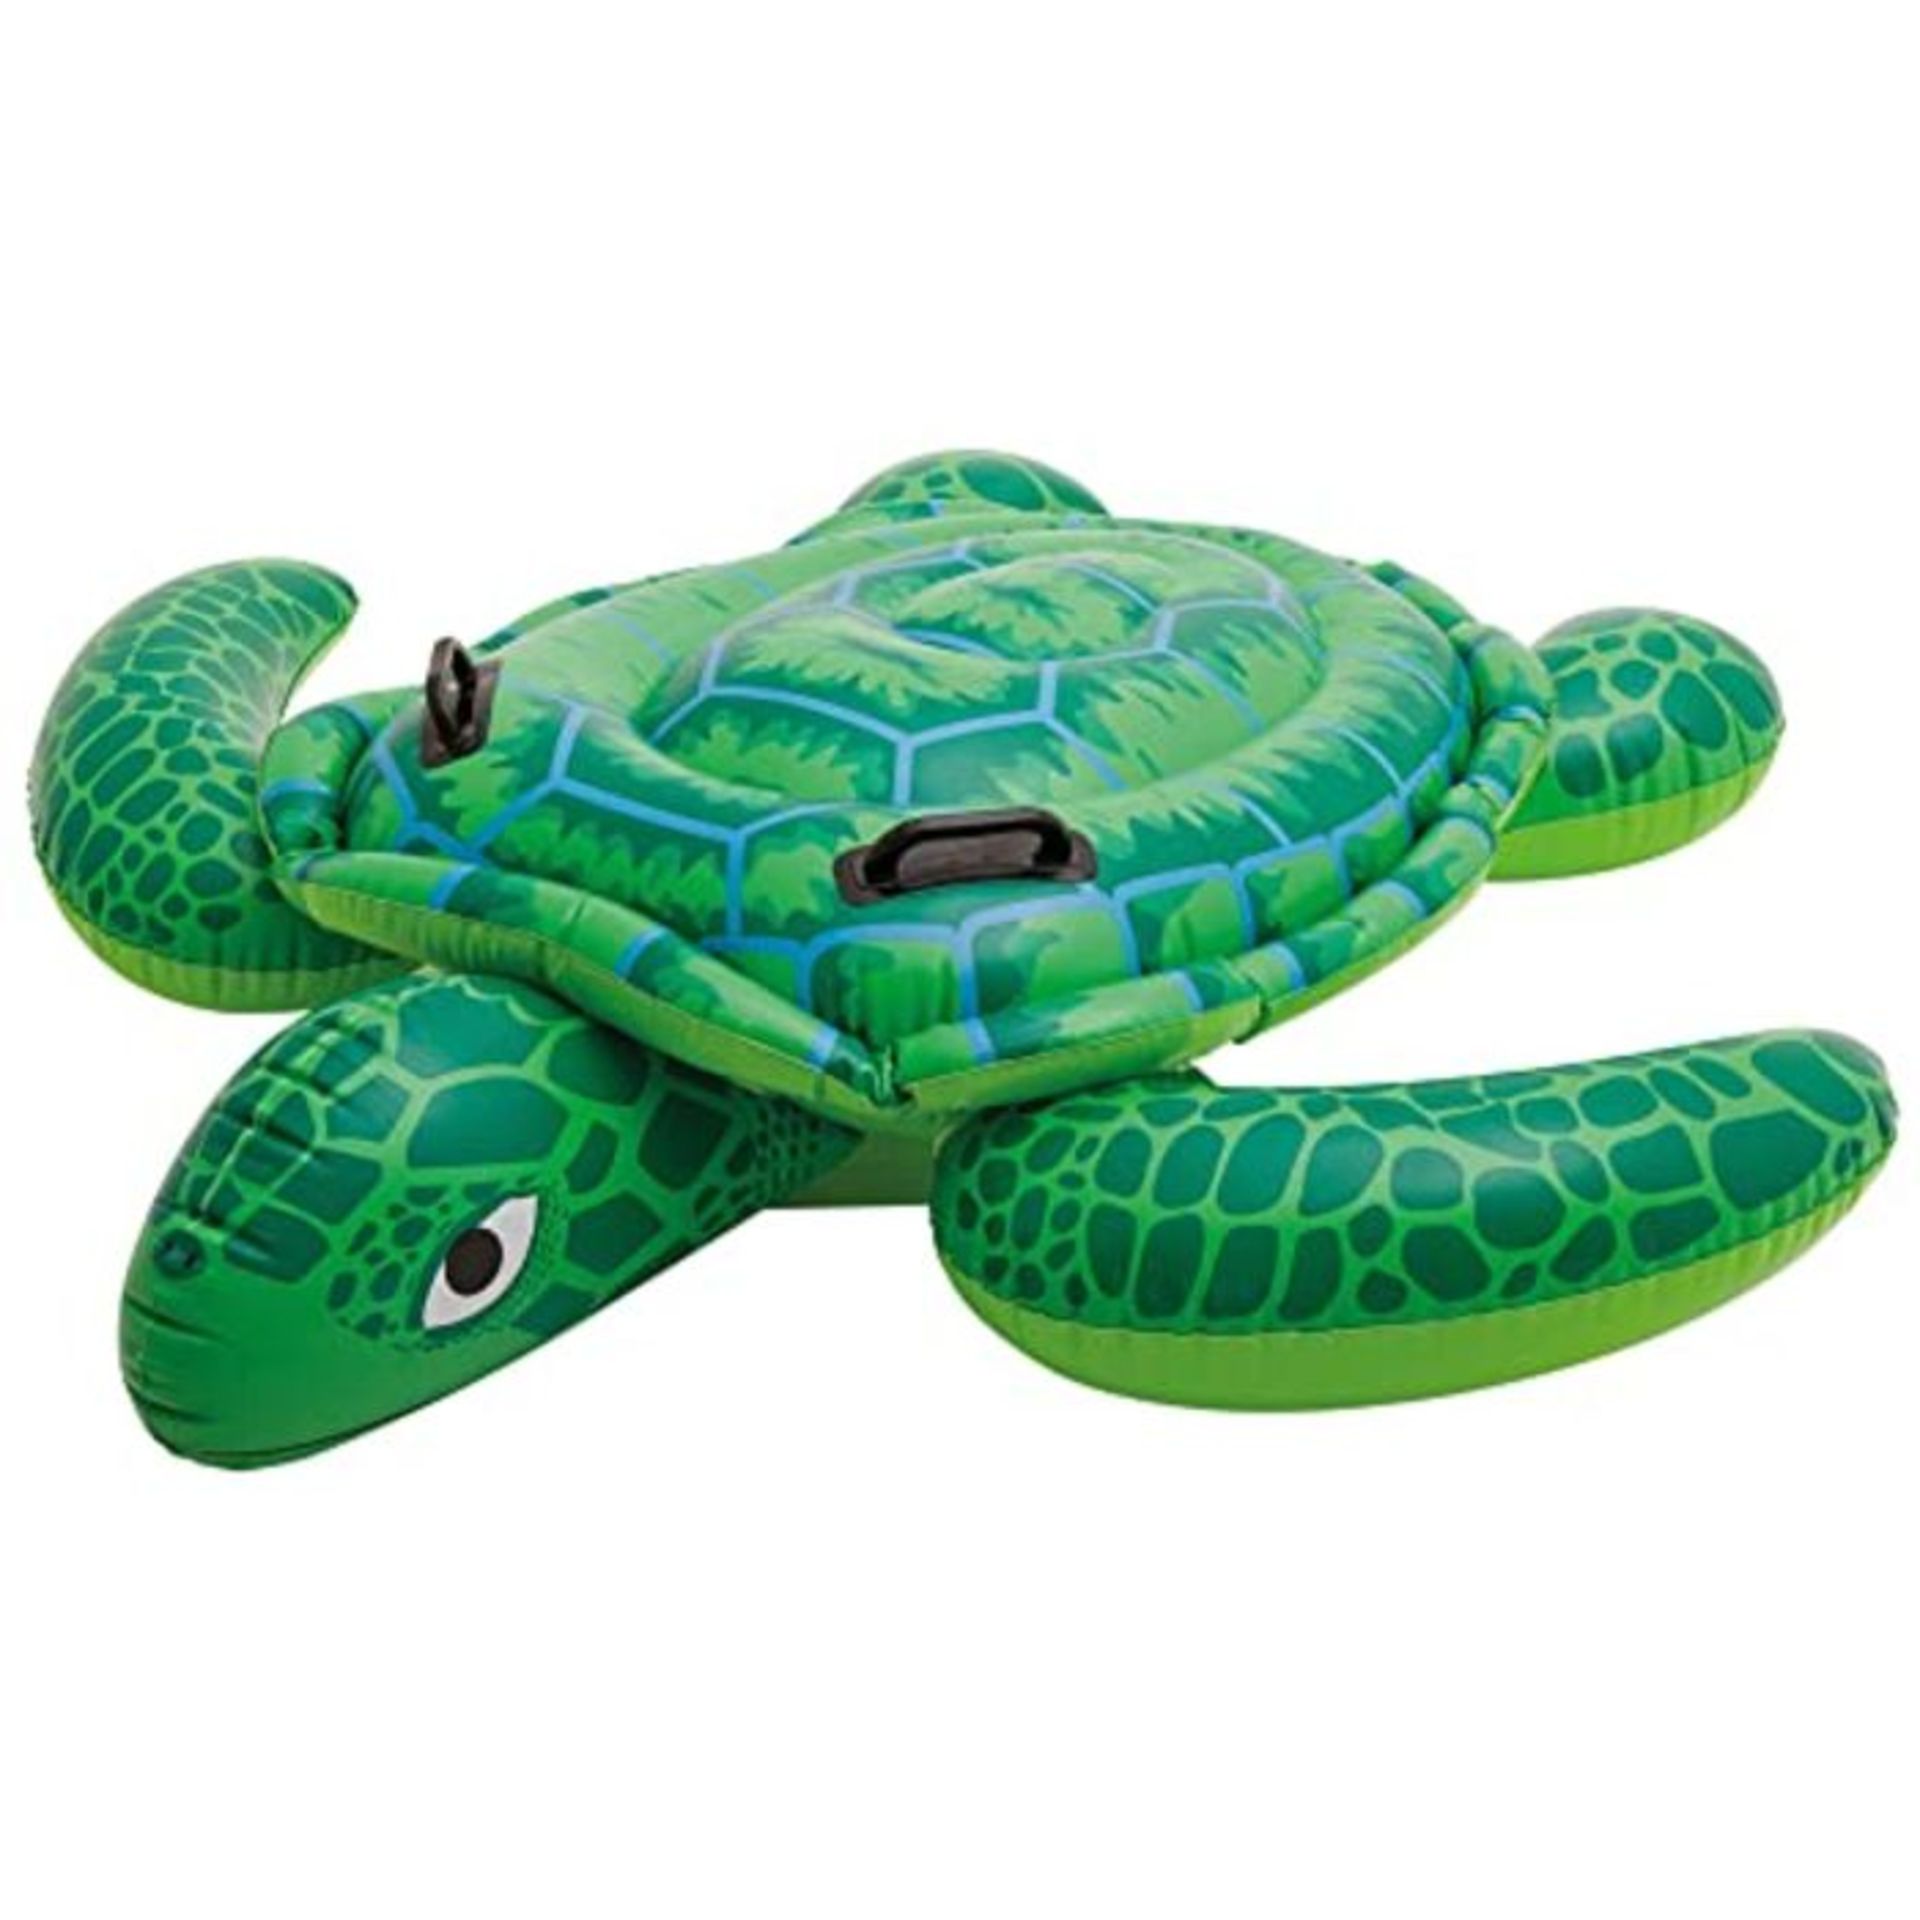 Intex Lil' Sea Turtle Ride On 1.50m x 1.27m Swimming Pool Beach Toy #57524NP